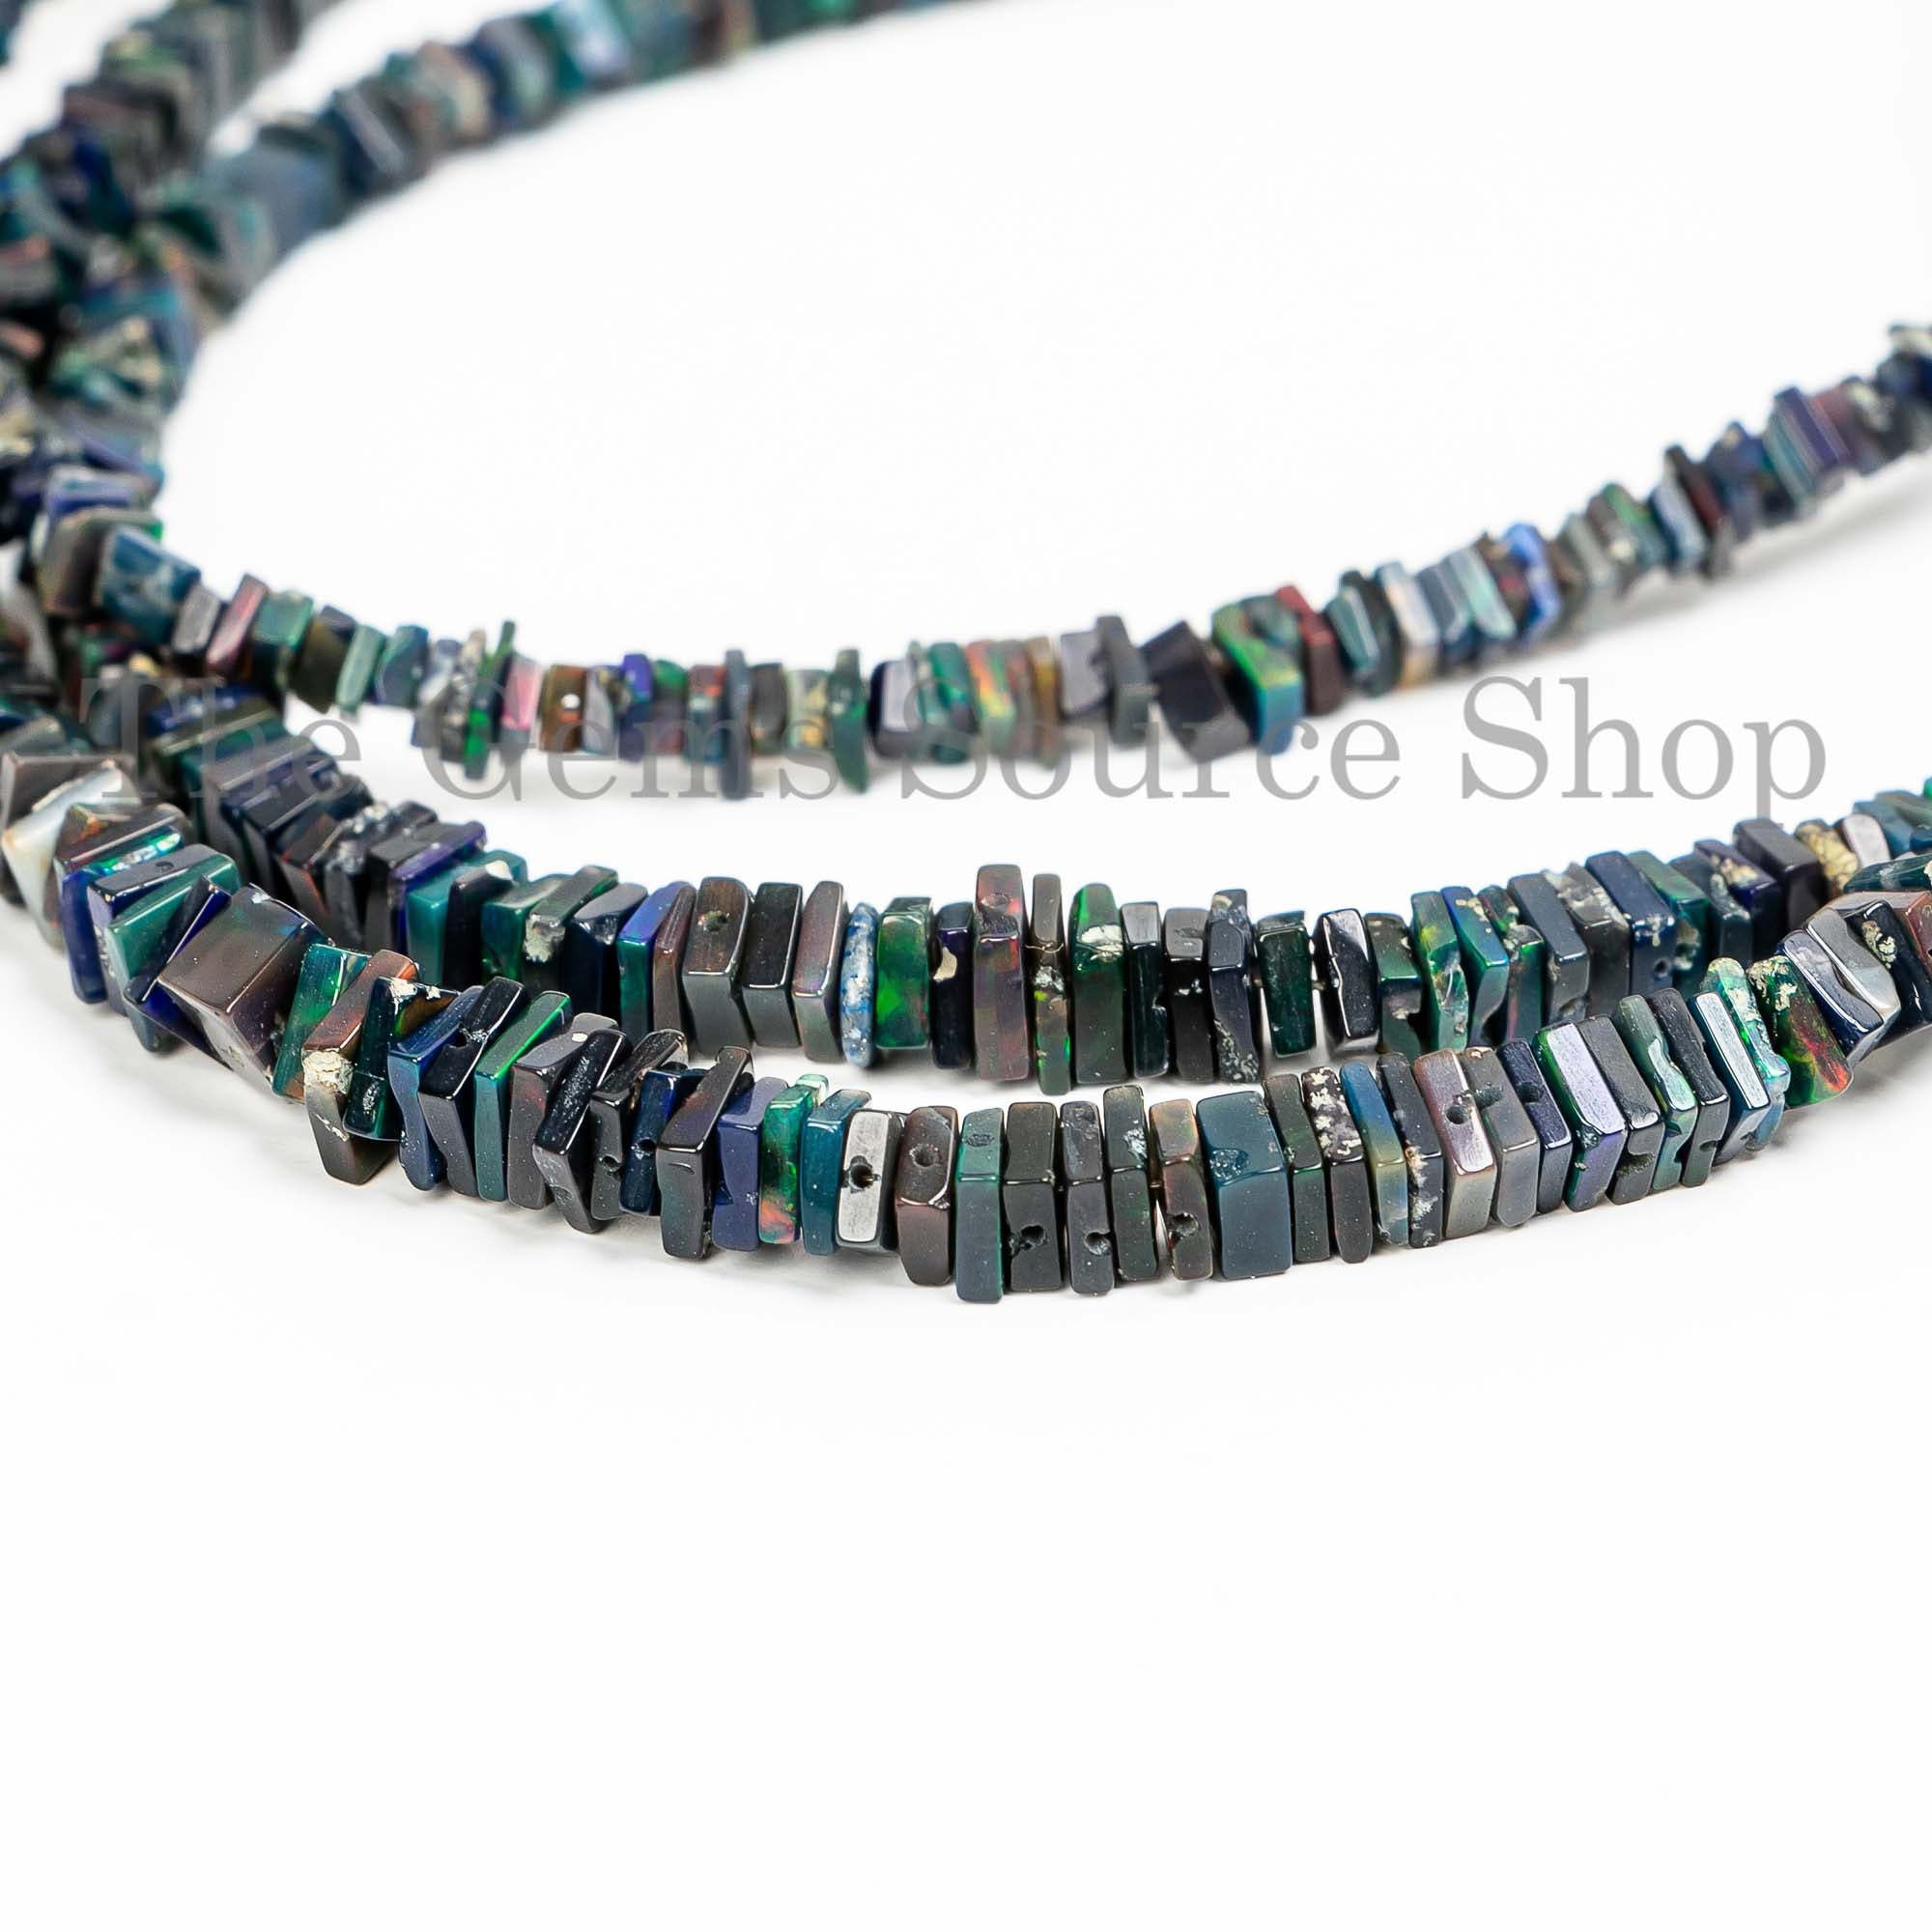 Black Opal Beads, Black Ethiopian Opal Beads, Opal Beads, Square Beads, Black Opal Heishi Beads